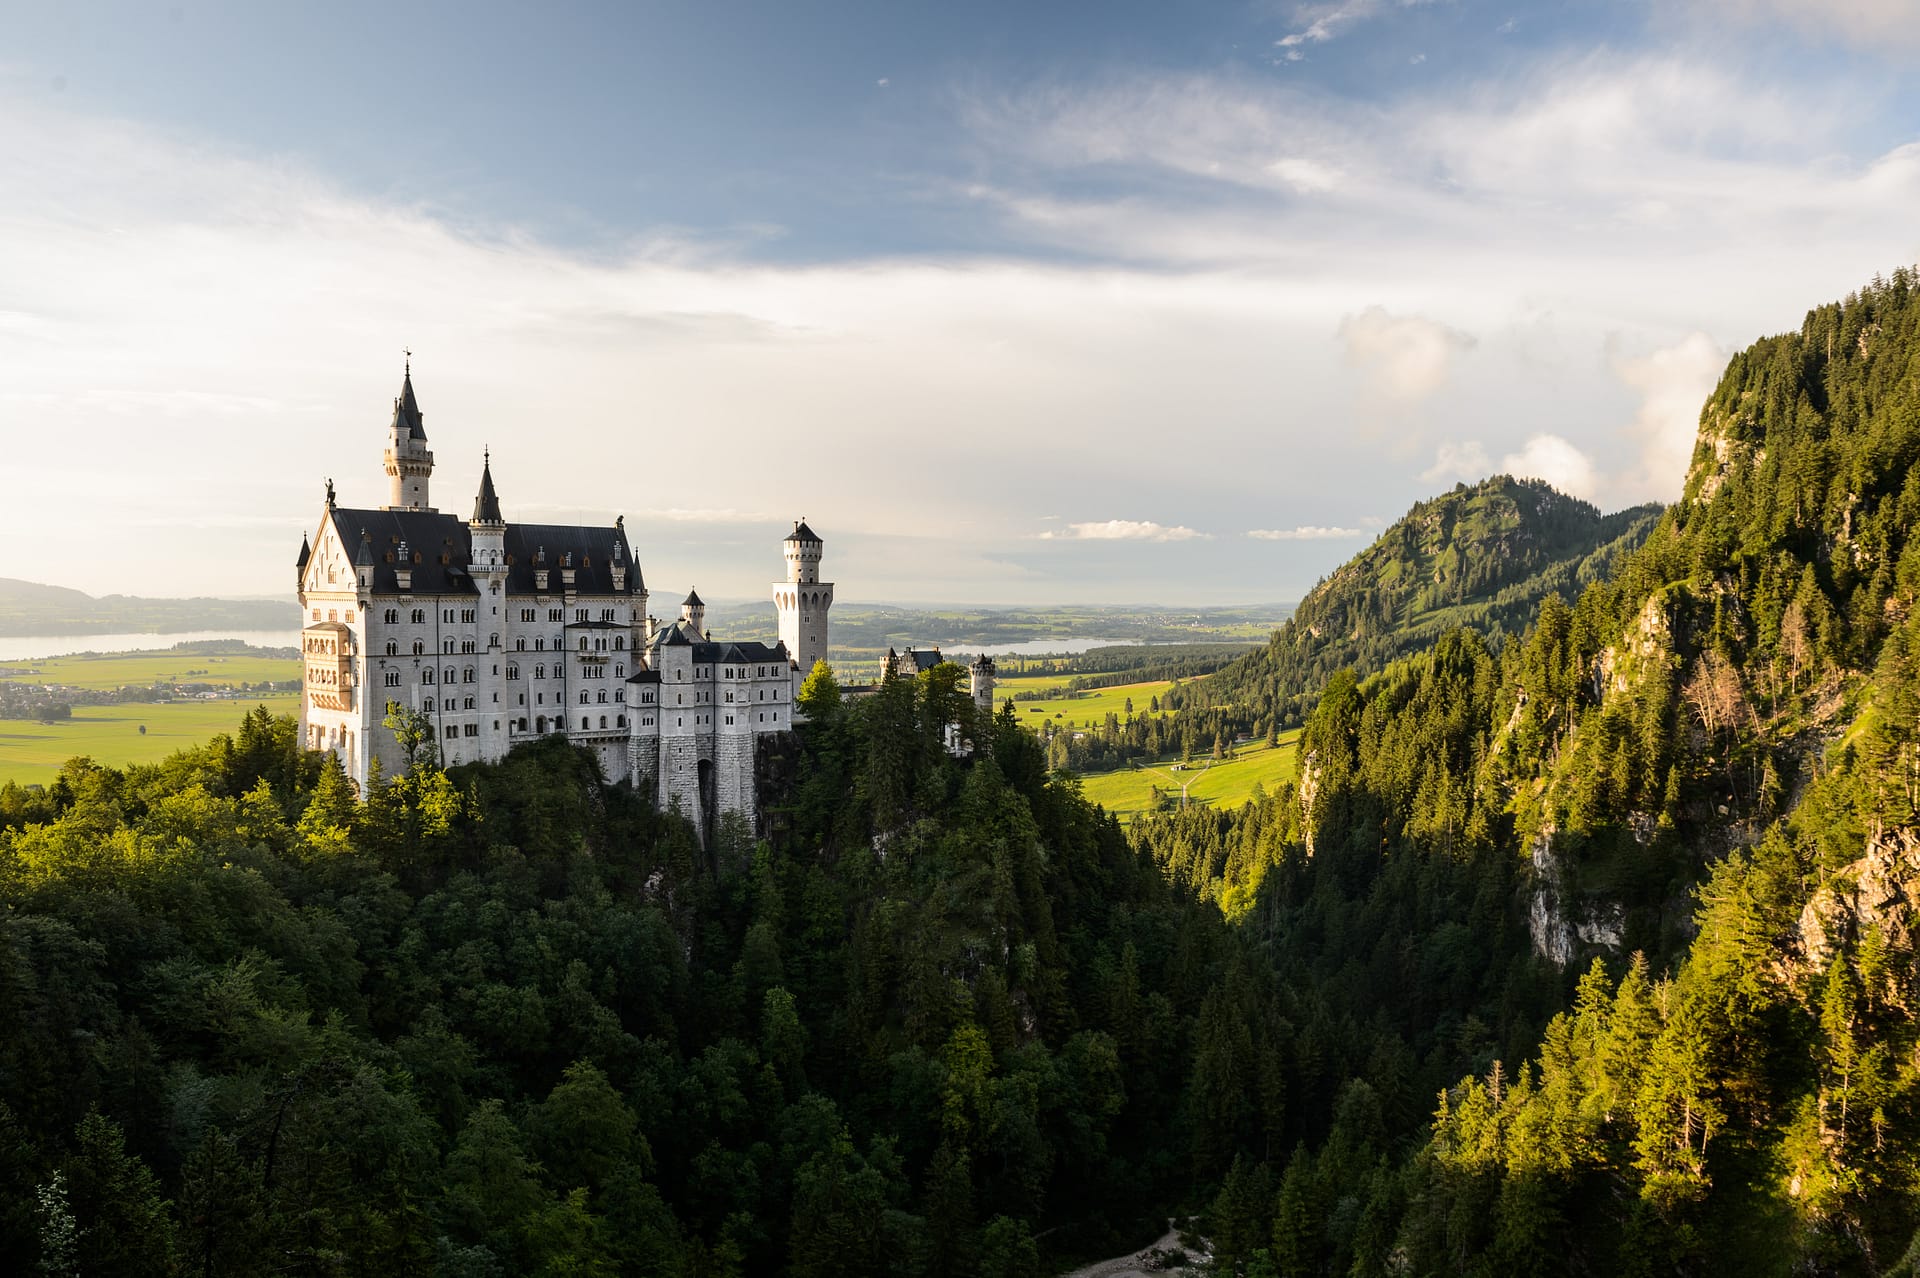 Neuschwanstein Castle, Germany; a fairytale enchanting castle